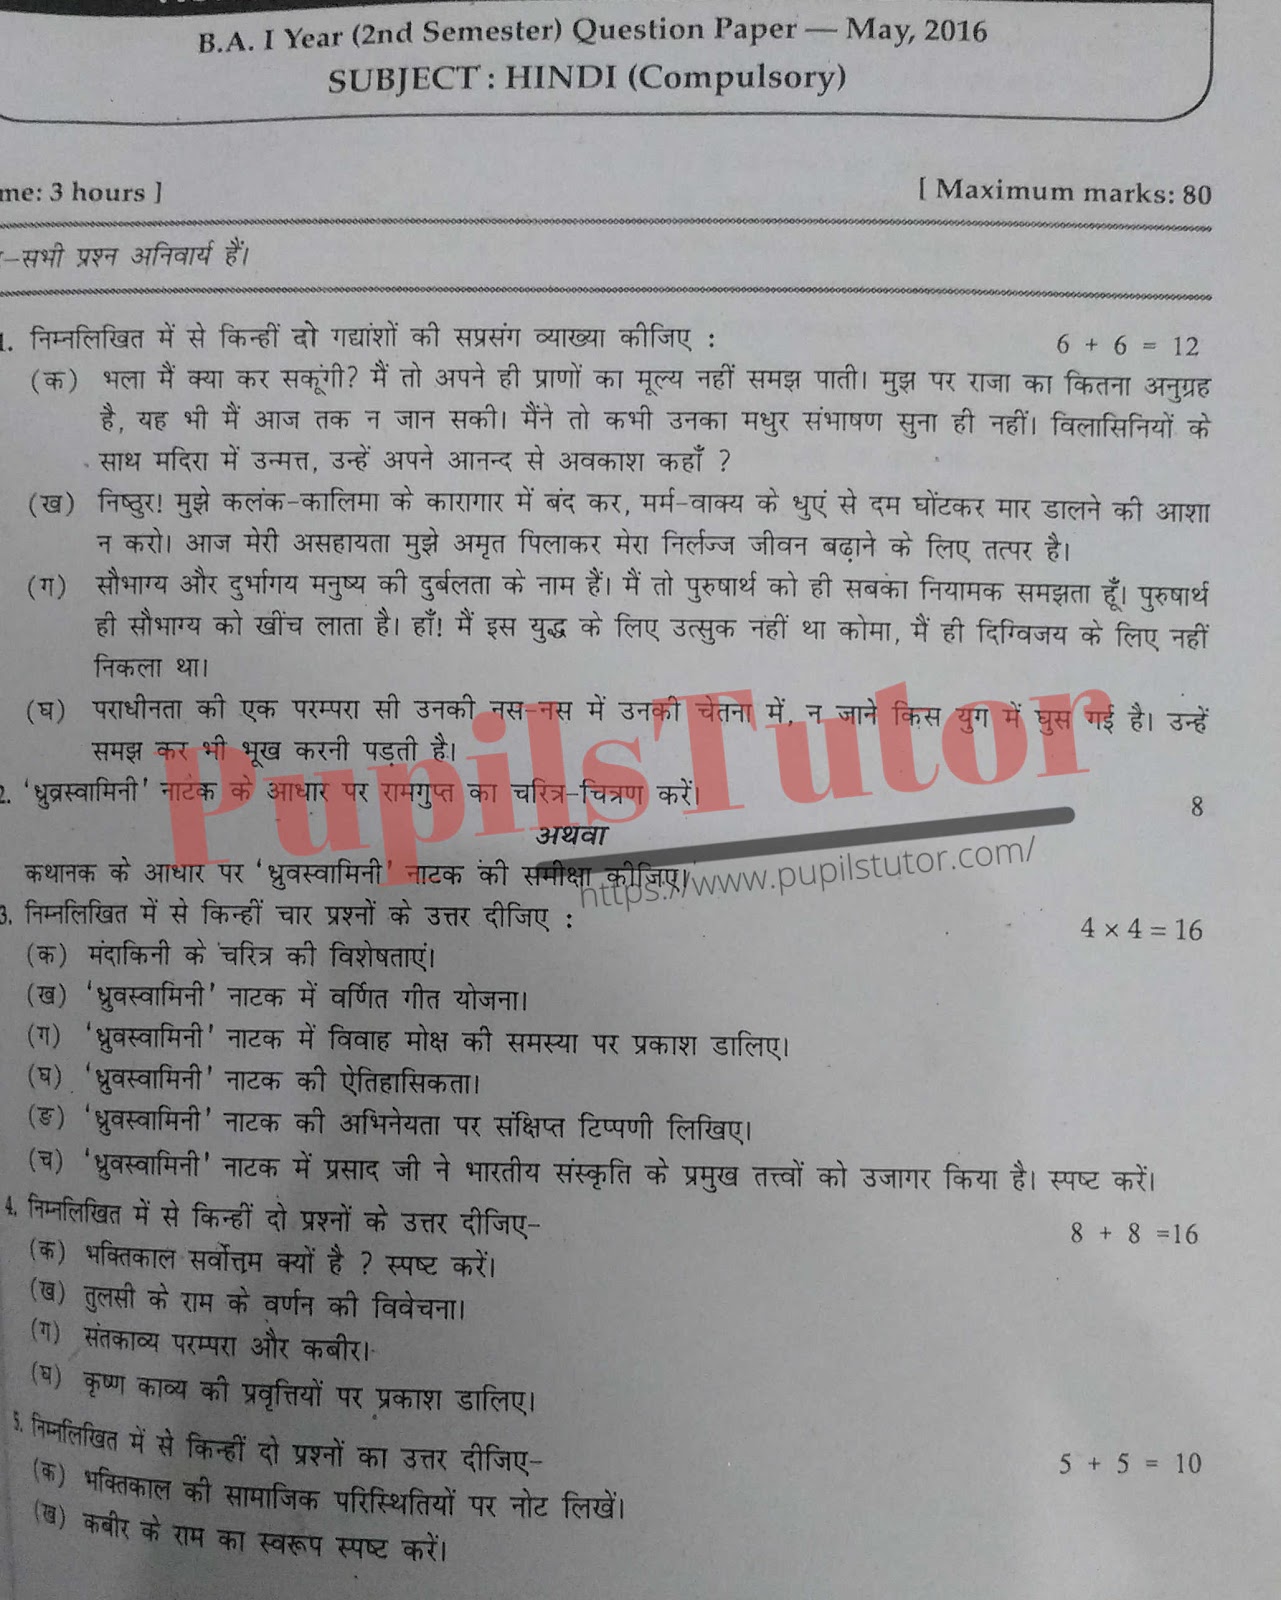 KUK (Kurukshetra University, Kurukshetra Haryana) BA Semester Exam Second Semester Previous Year Hindi Question Paper For May, 2016 Exam (Question Paper Page 1) - pupilstutor.com